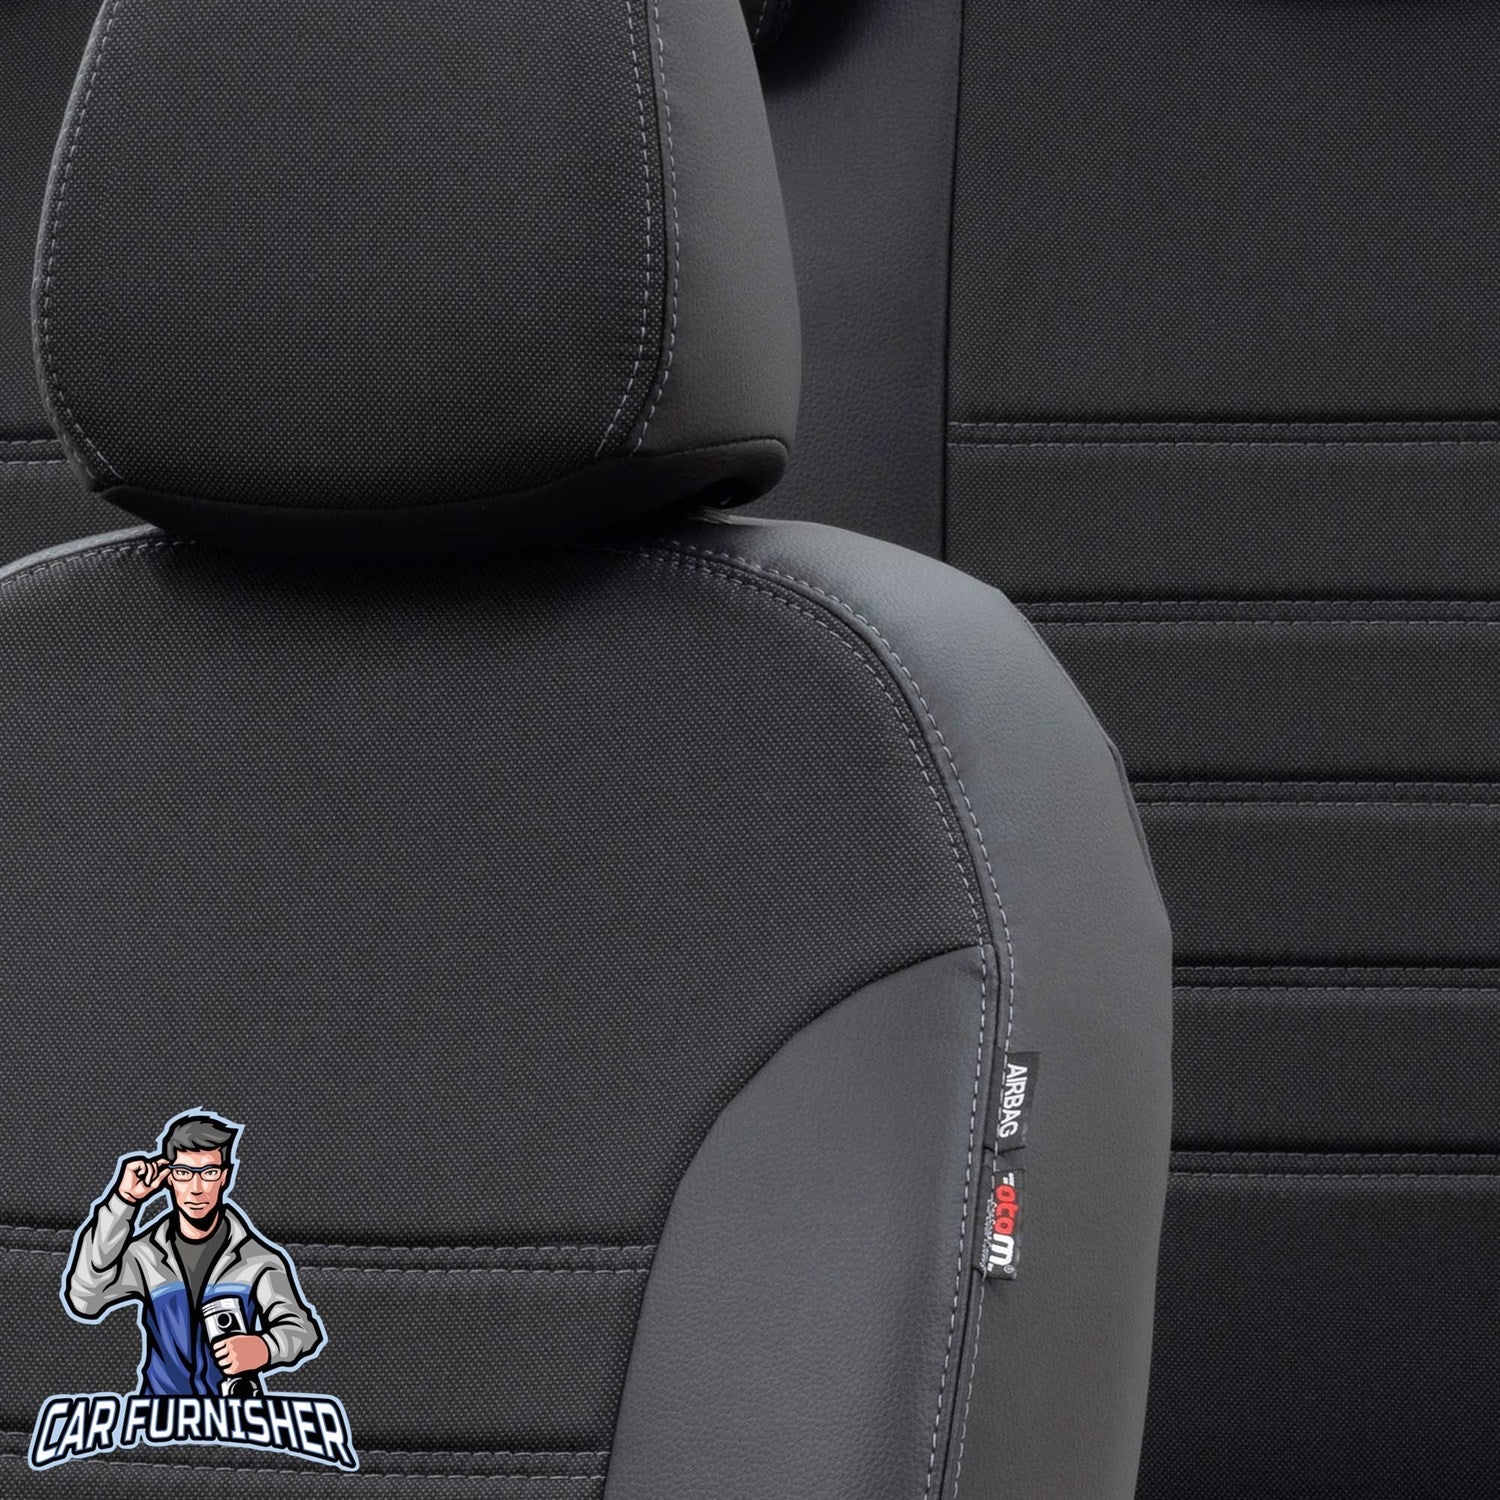 Fiat Brava Seat Covers Paris Leather & Jacquard Design Black Leather & Jacquard Fabric